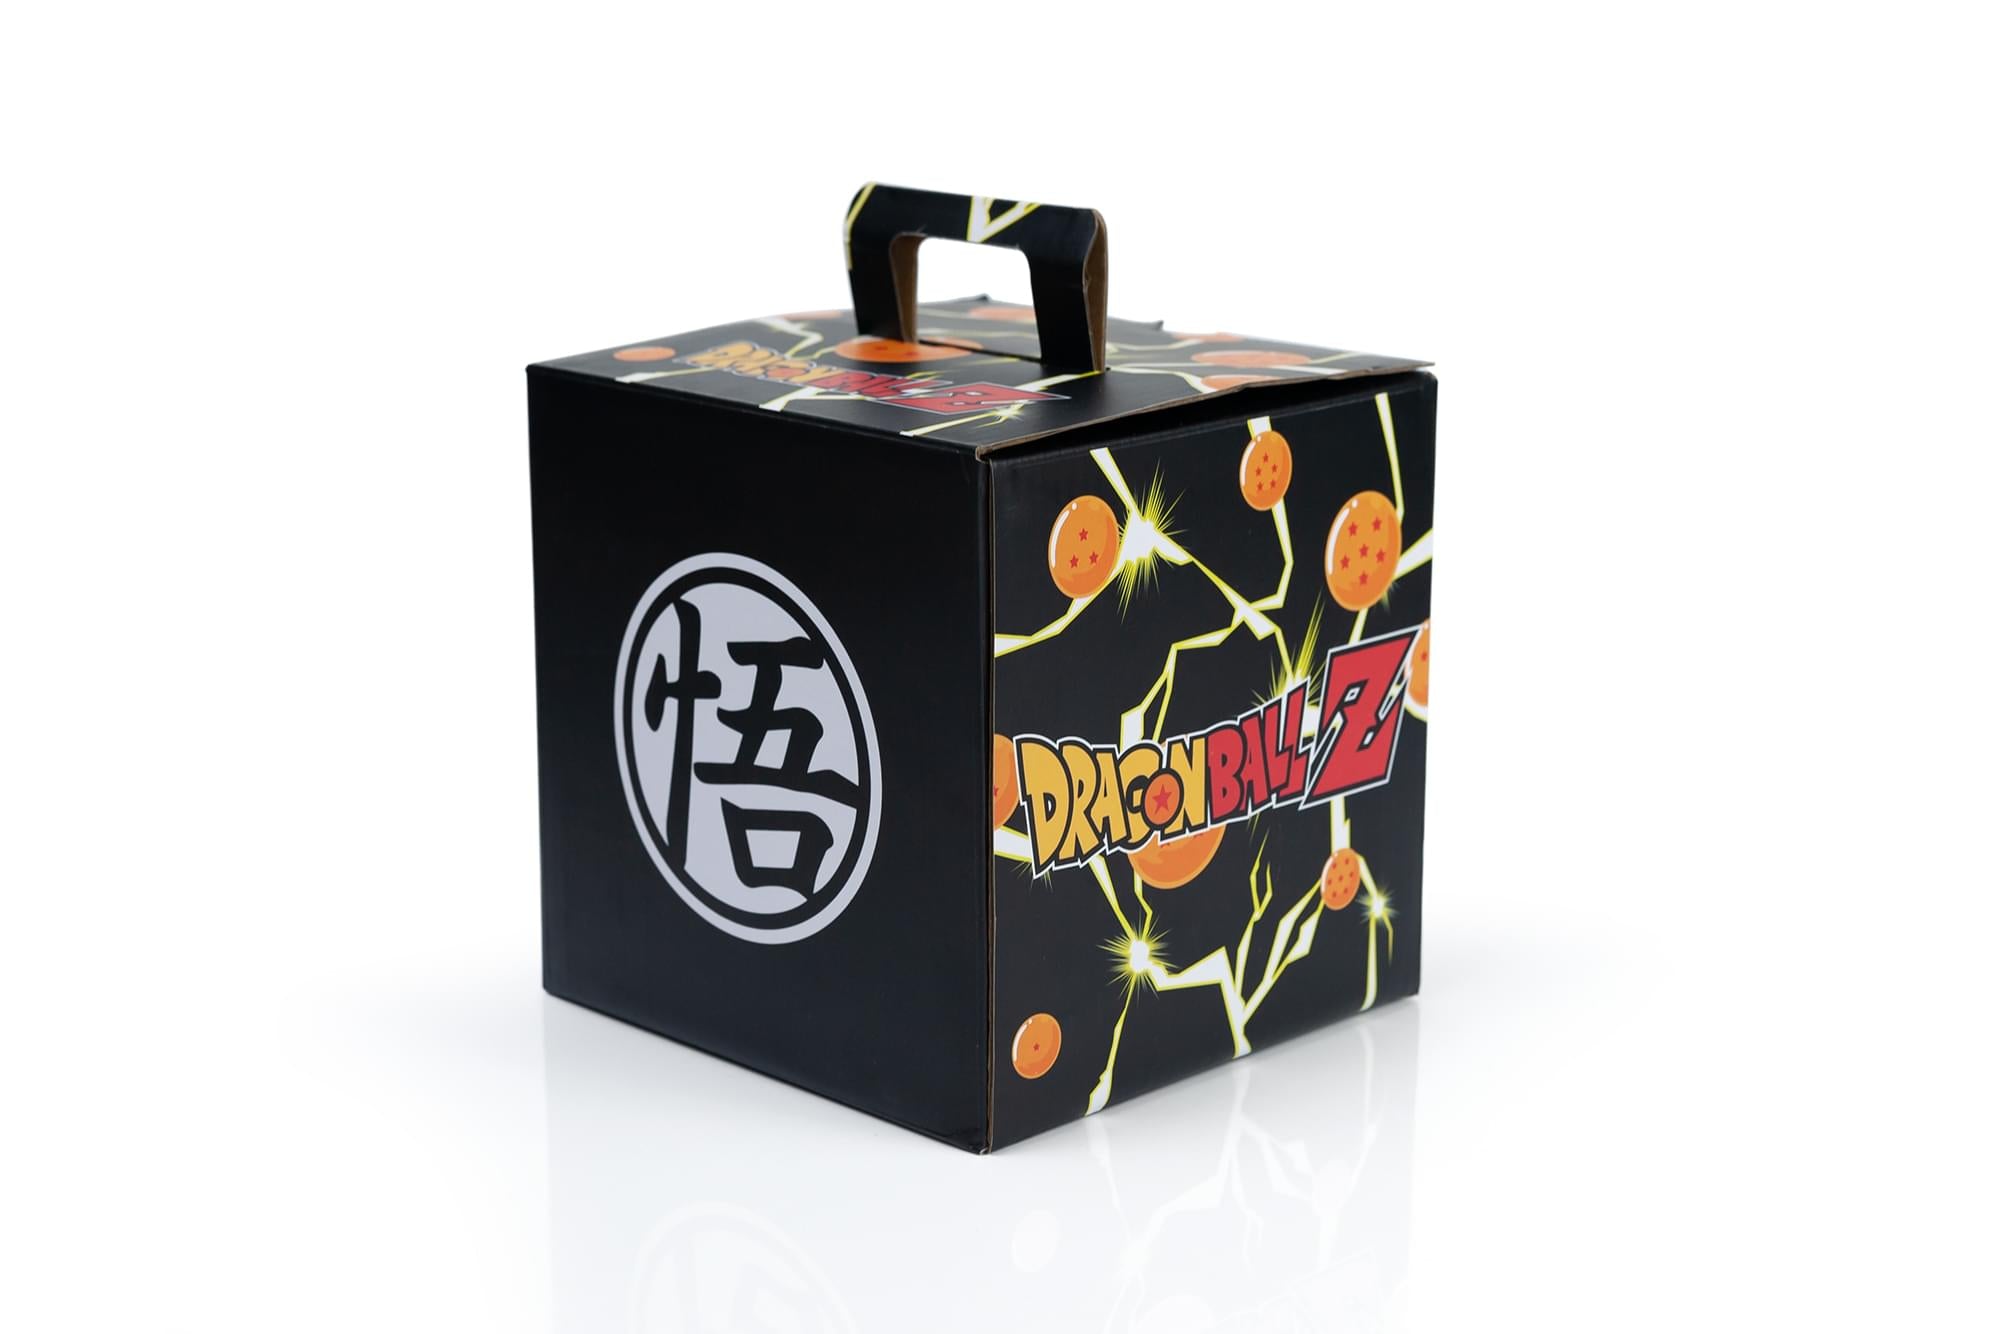 Dragon Ball Z Super Broly Collector's Box Set GameStop Exclusive